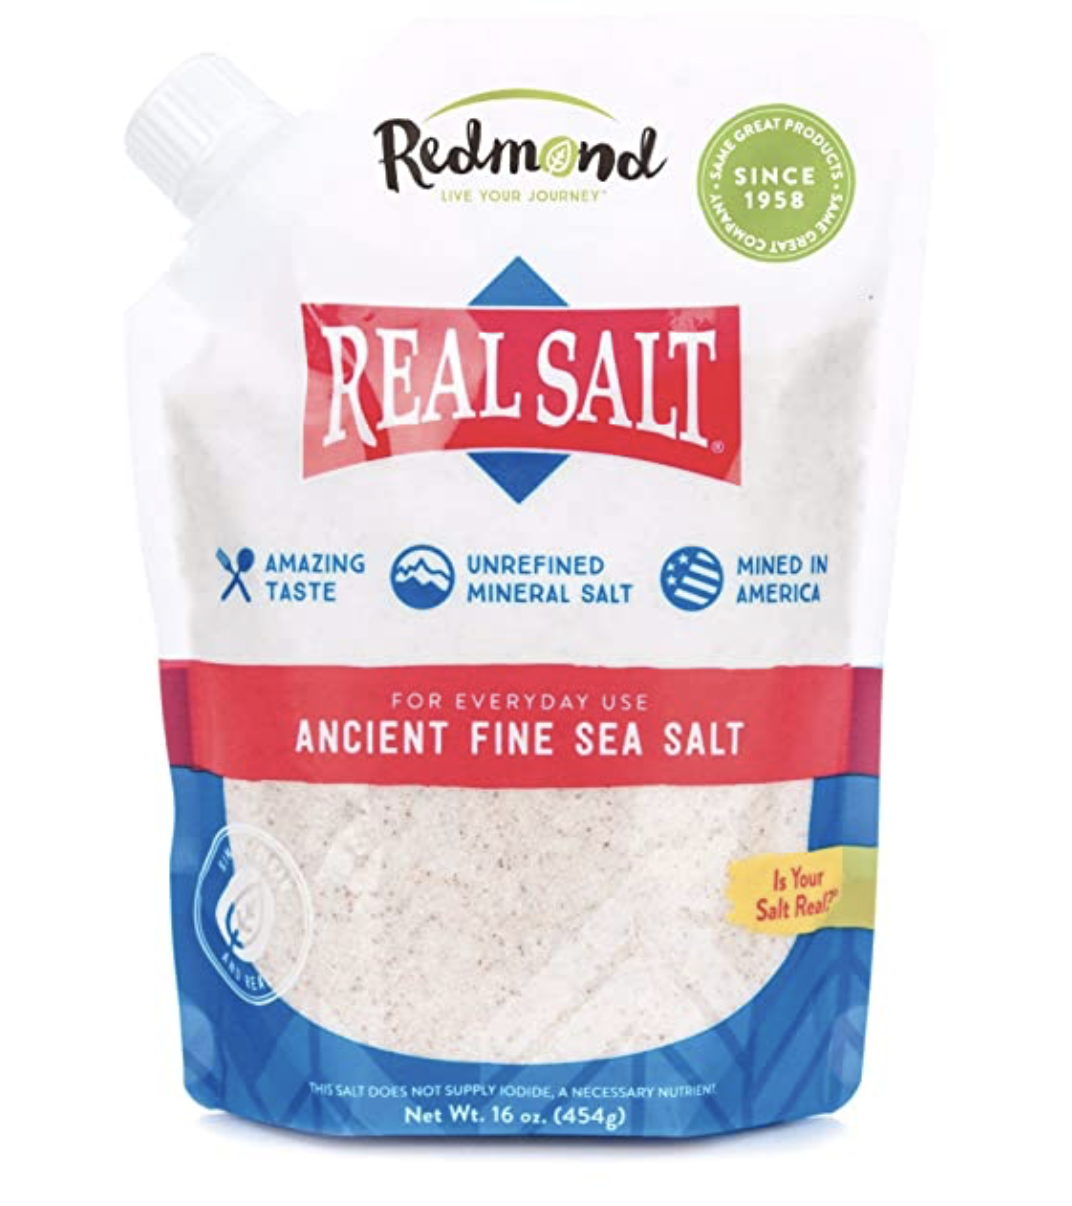 Redmond Real Salt - Ancient Fine Sea Salt, Unrefined Mineral Salt, 16 Ounce Pouch (1 Pack)
